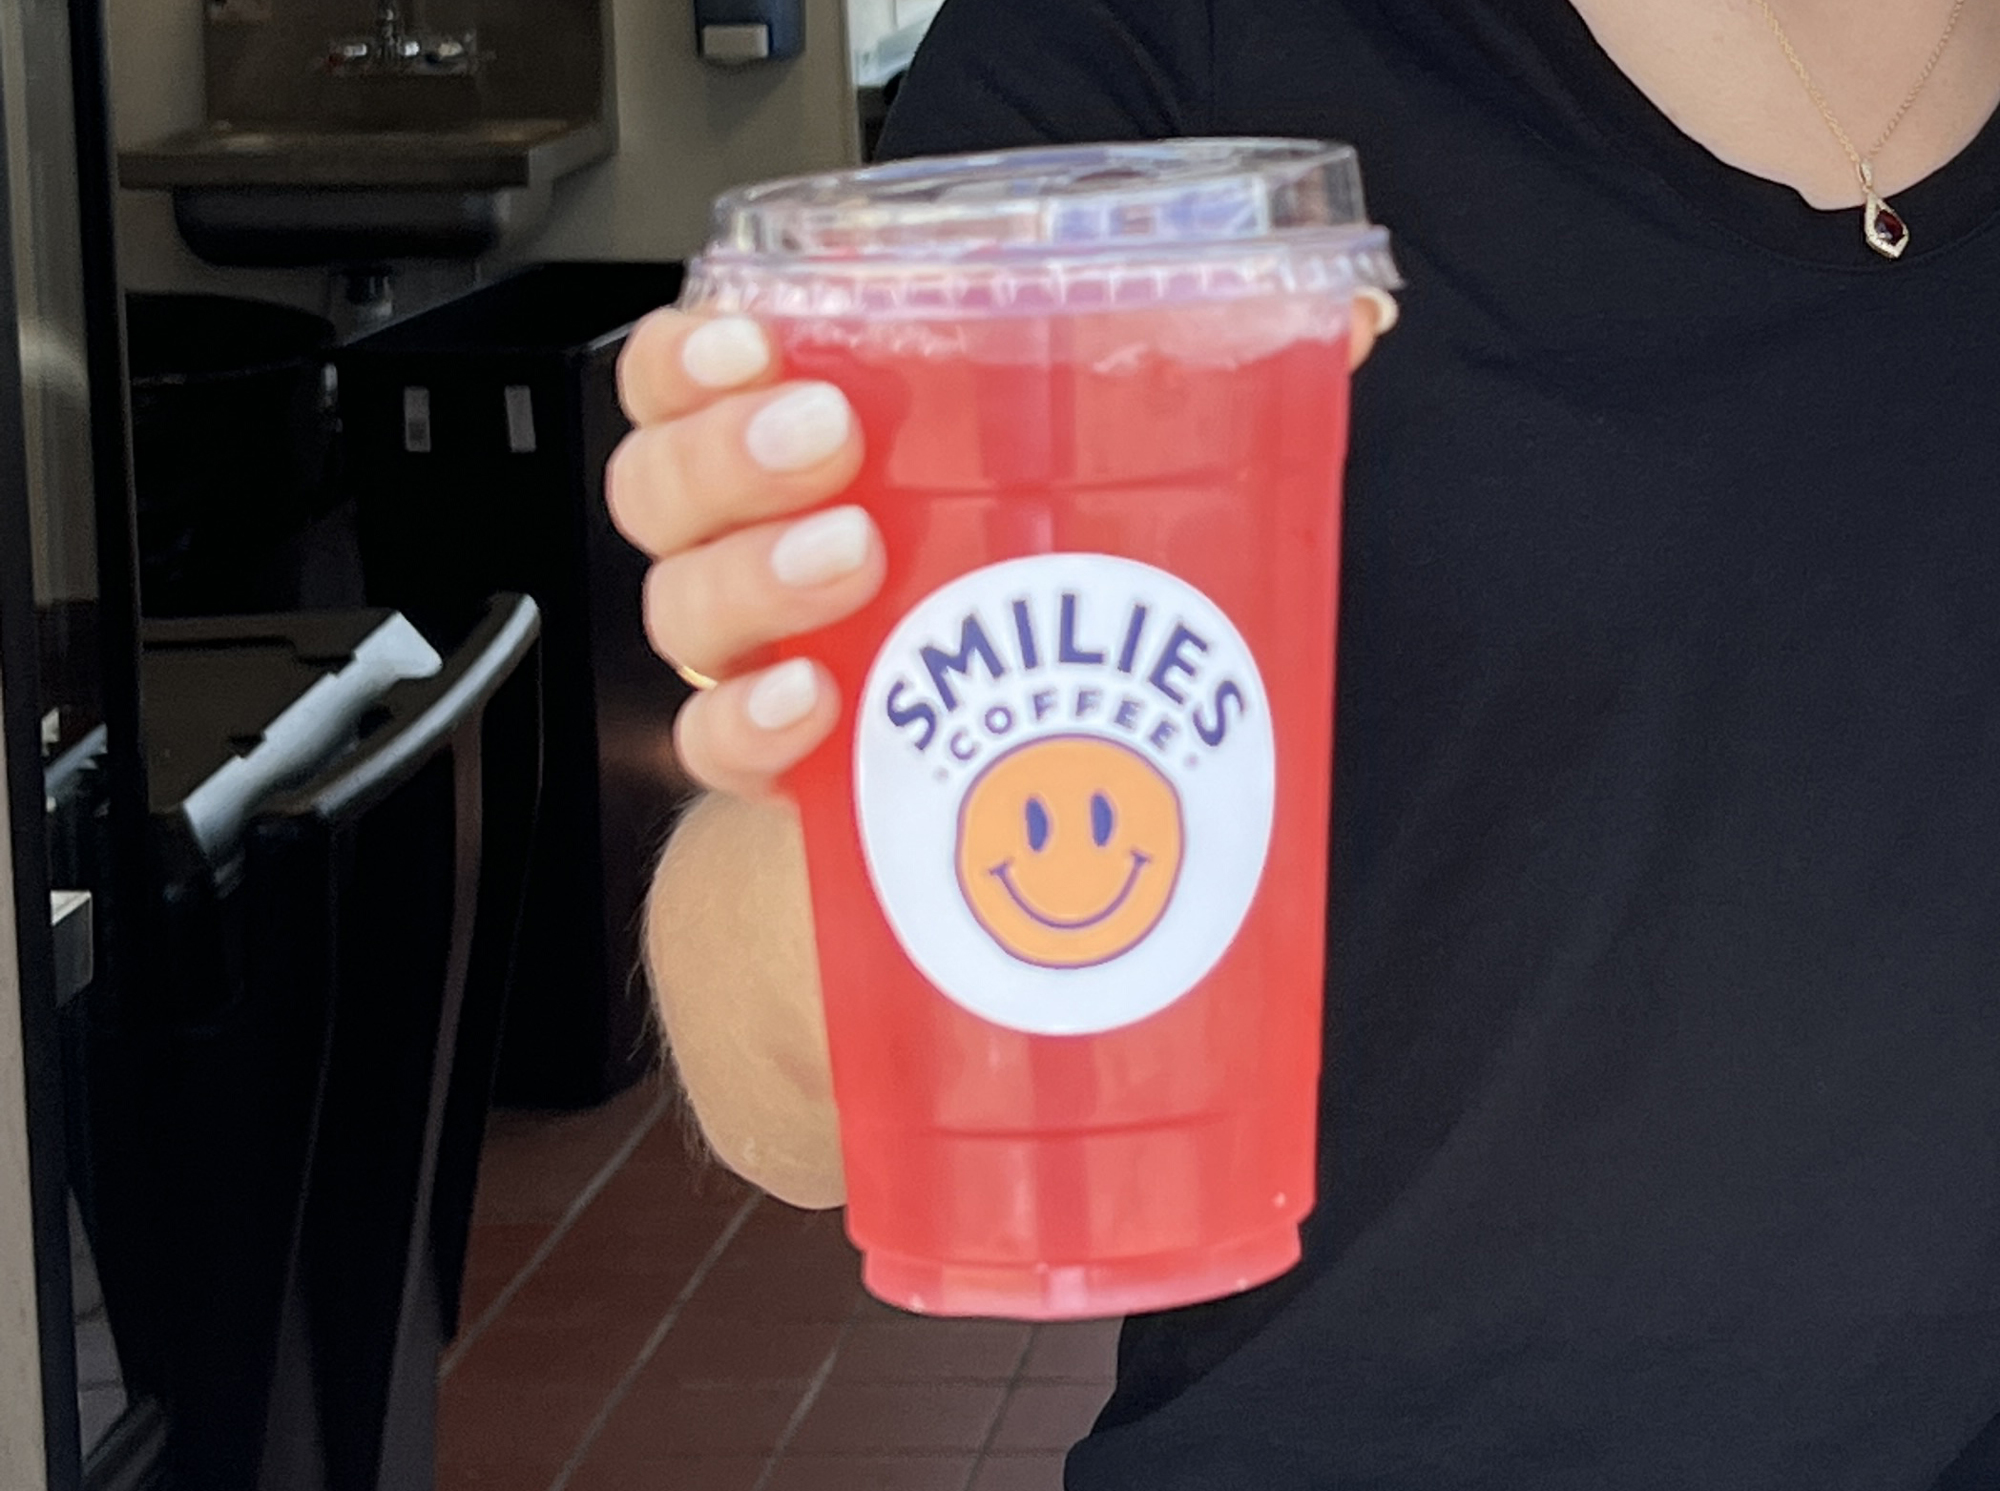 Besides basic coffee drinks, Smilies serves smoothies, milkshakes, lemonades, teas and Italian sodas.